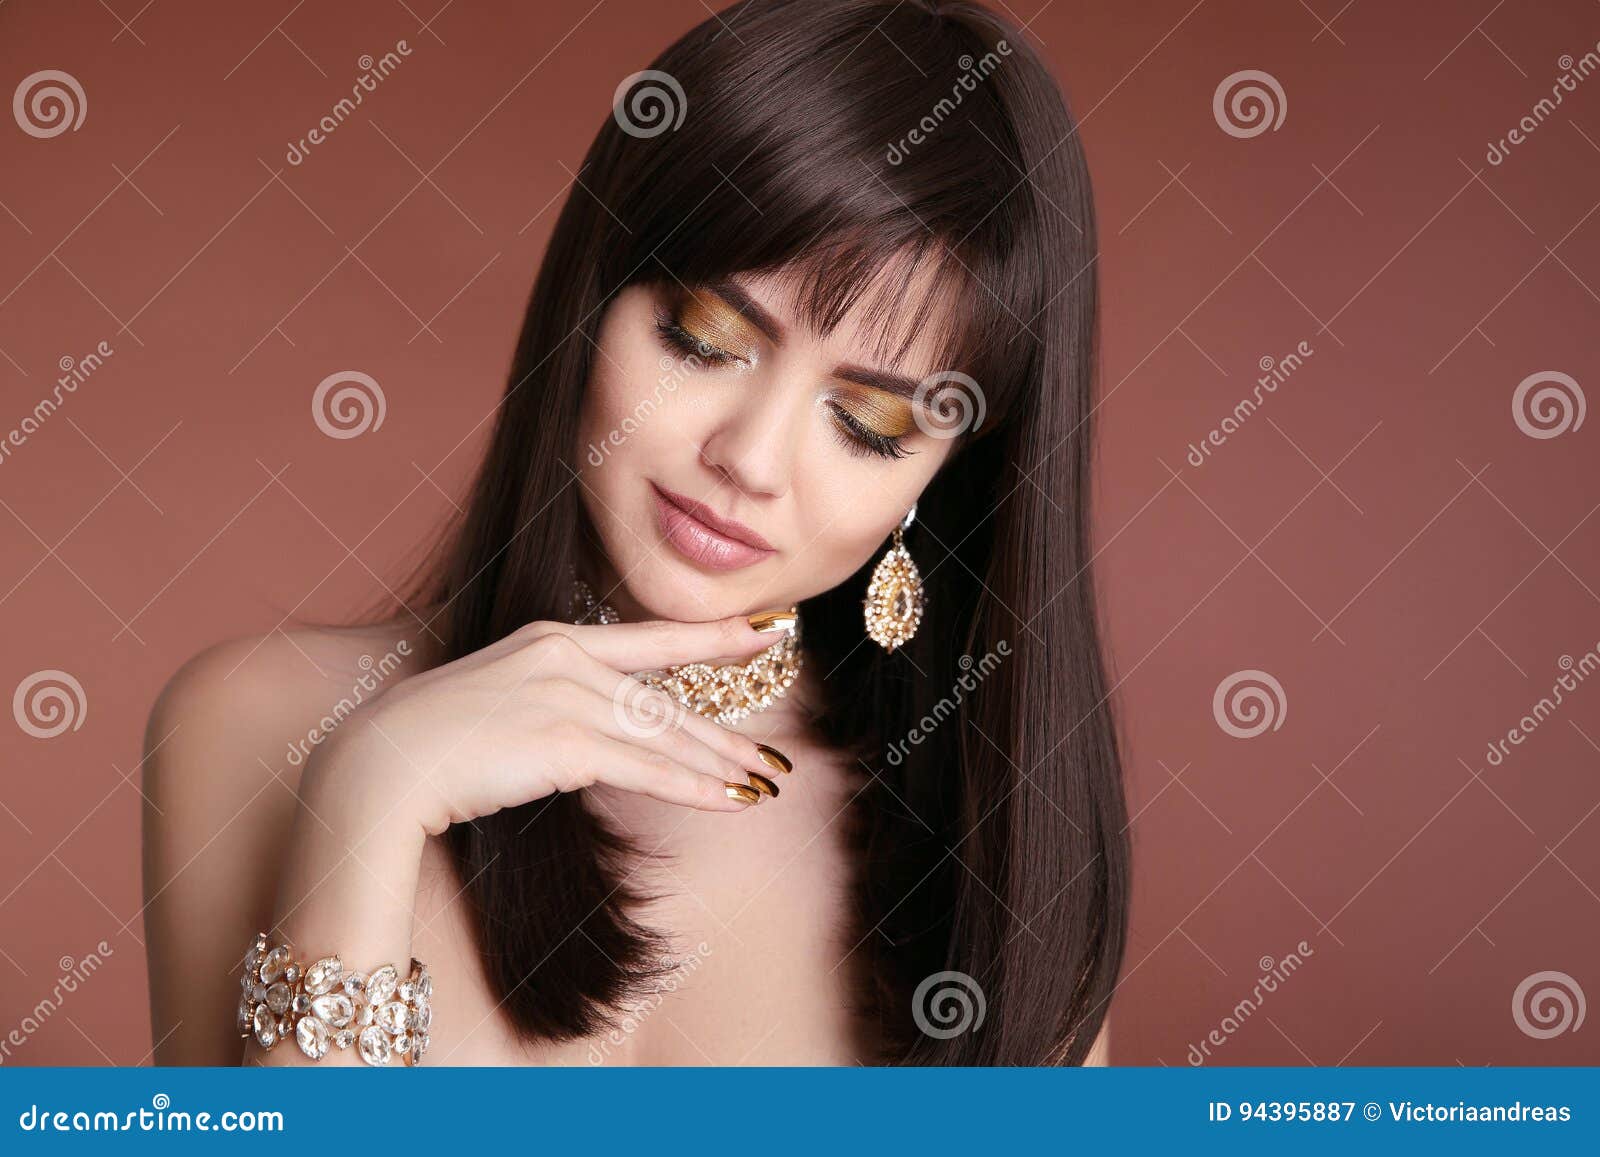 Nails Manicure Beauty Girl Brunette Portrait Fashion Golden Jewelry Women Set Female With 